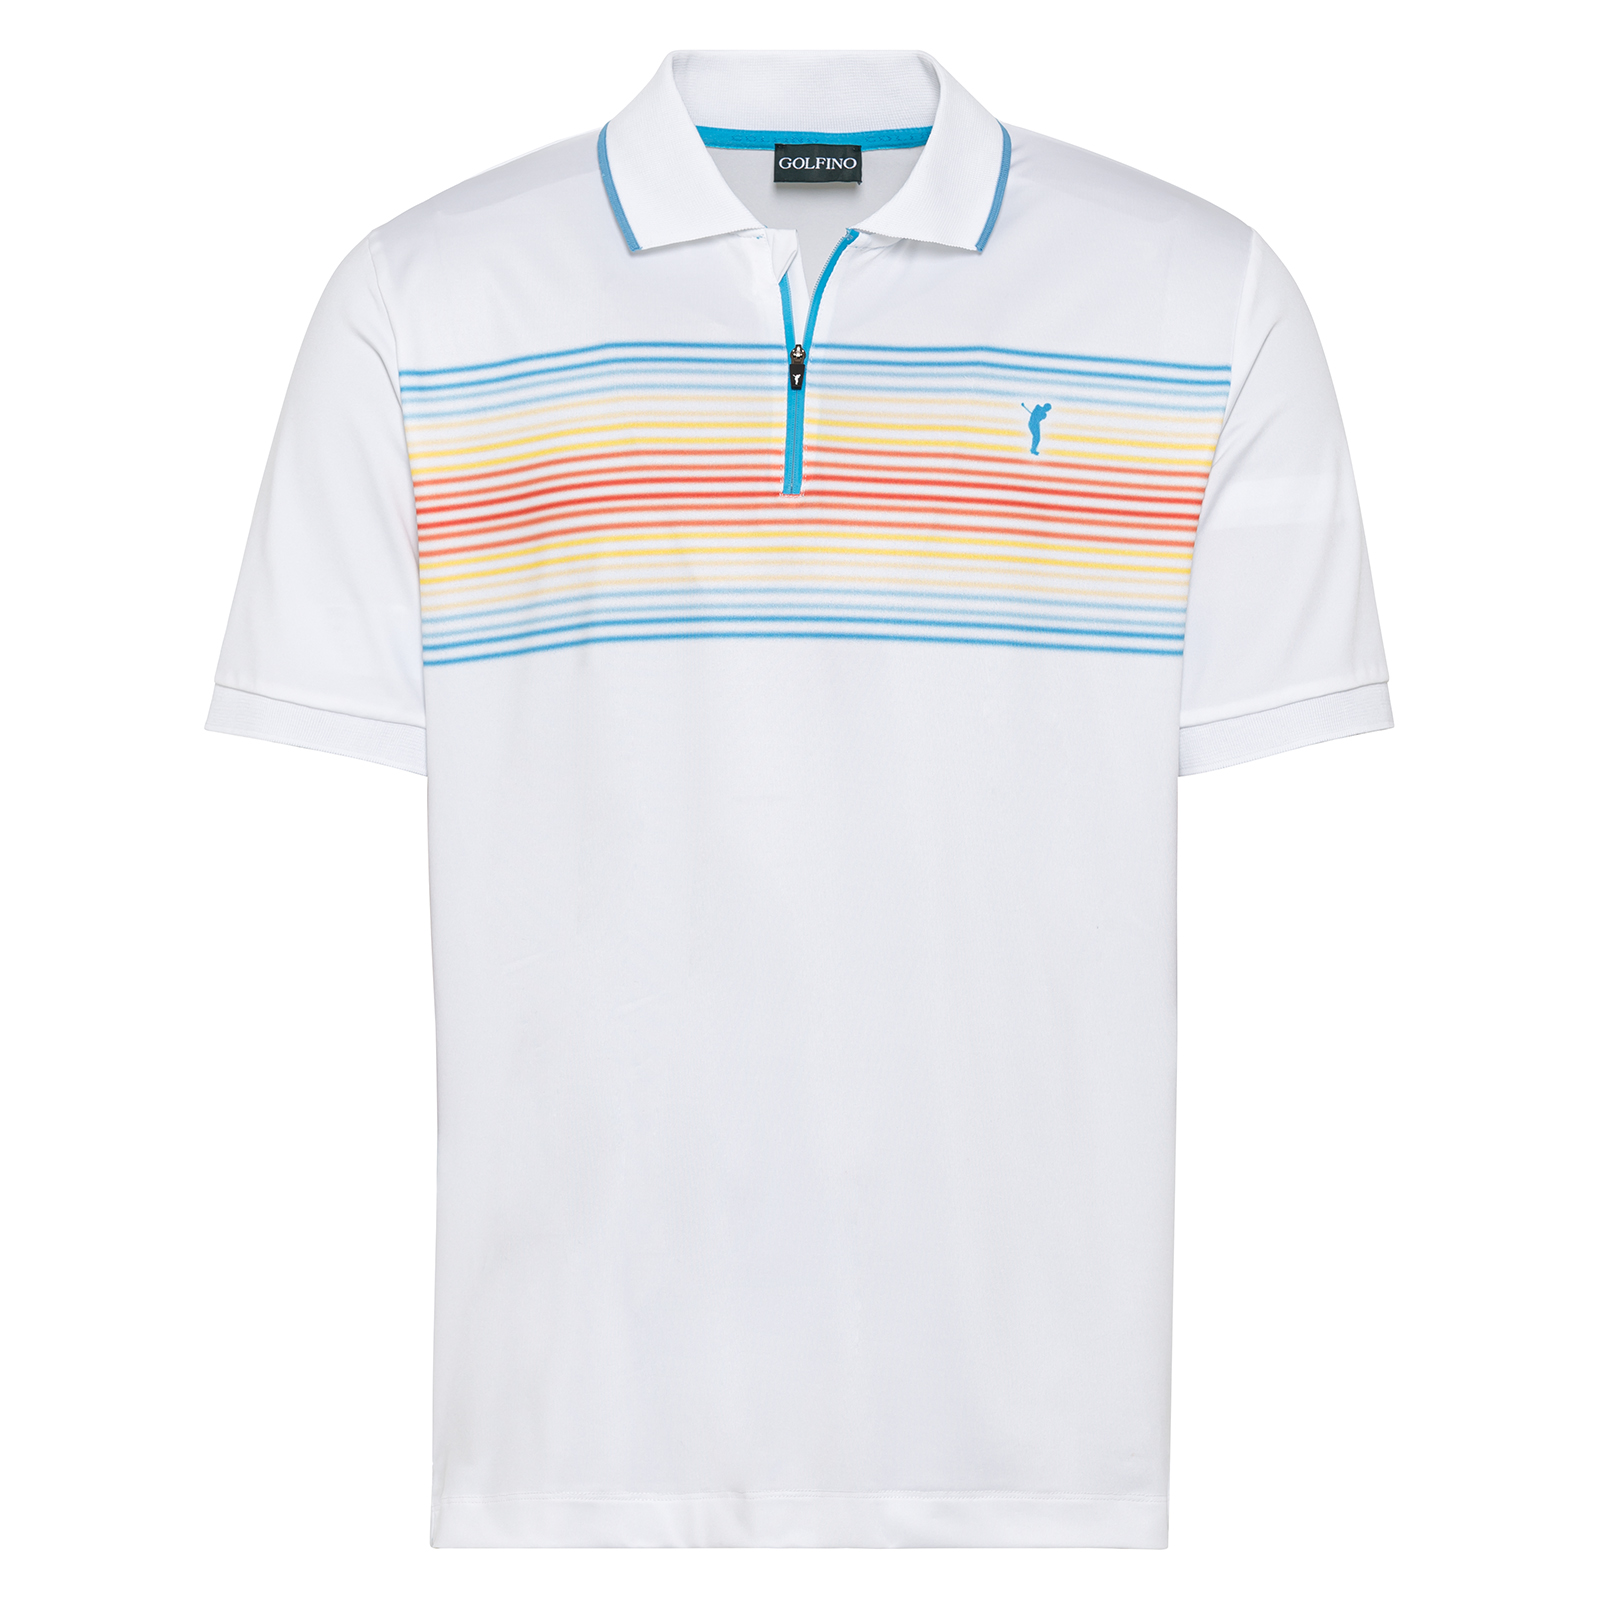 Men's stretch golf polo shirt with modern stripe pattern 